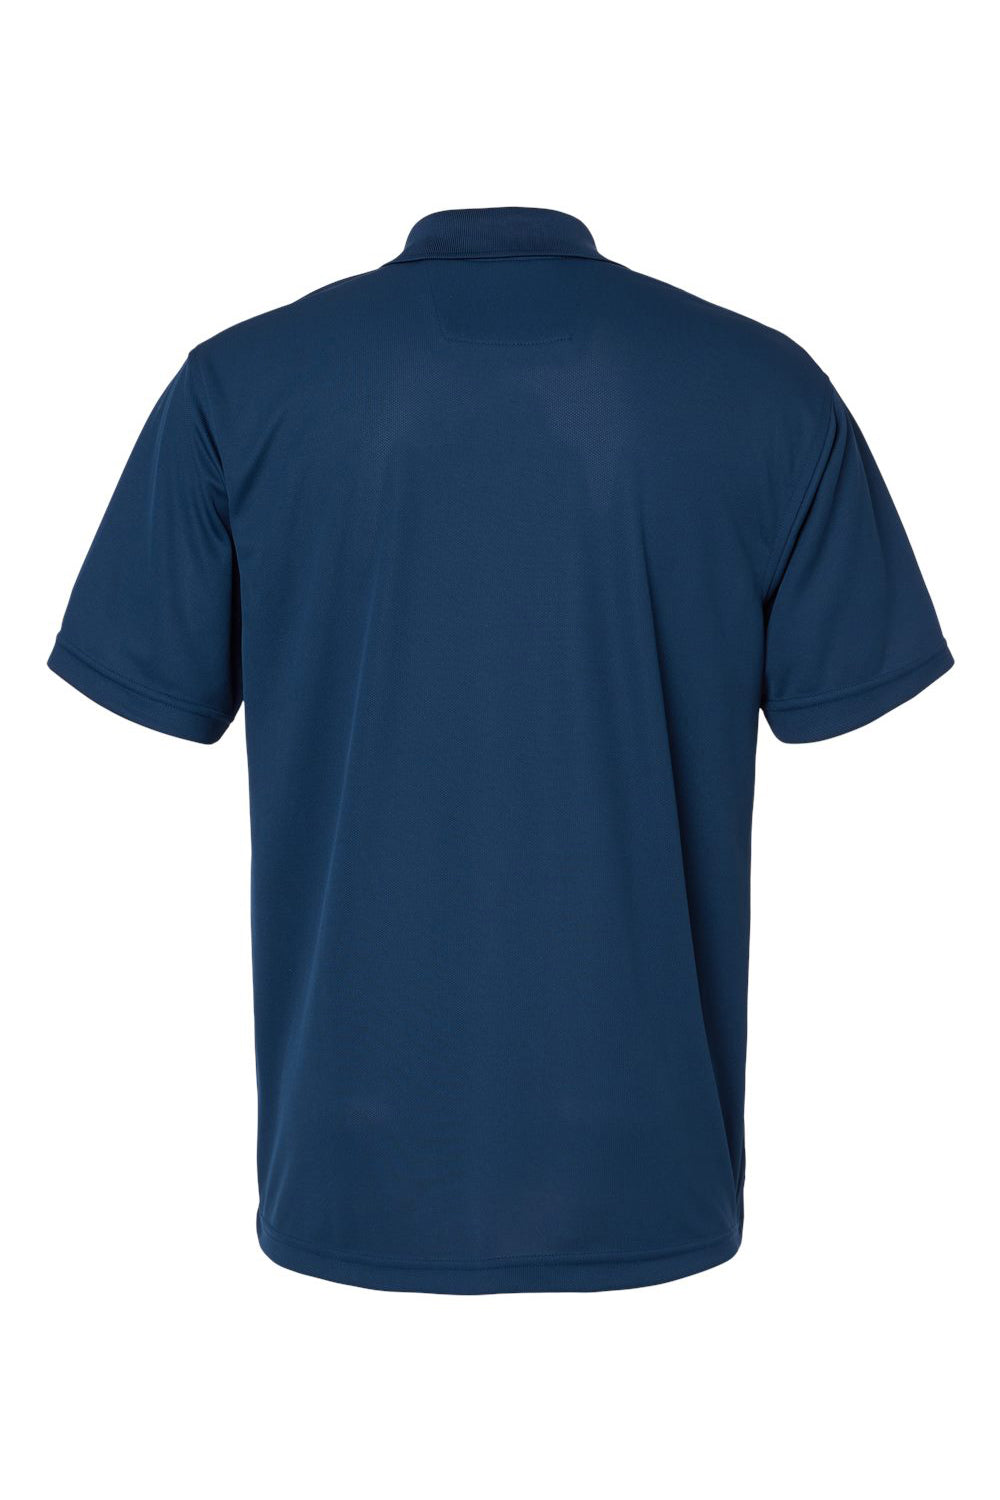 Paragon 100 Mens Saratoga Performance Mini Mesh Short Sleeve Polo Shirt Navy Blue Flat Back